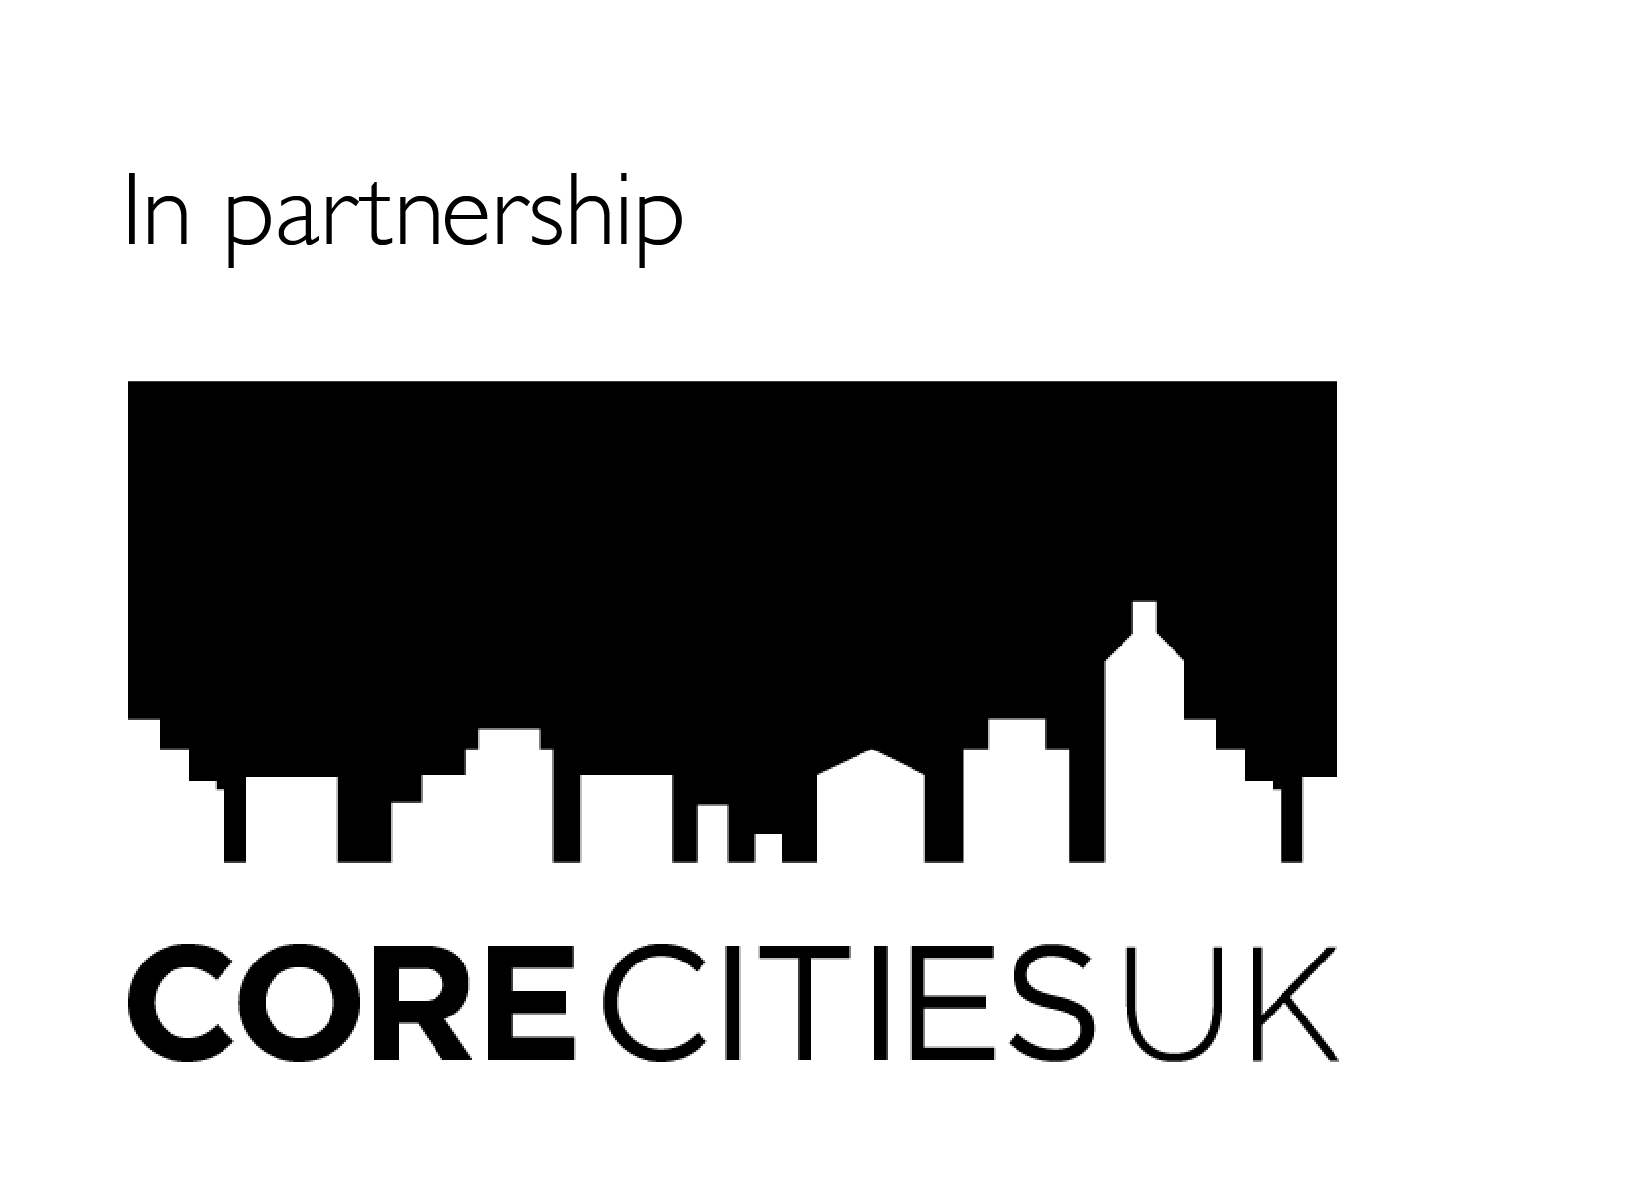 Core Cities UK logo